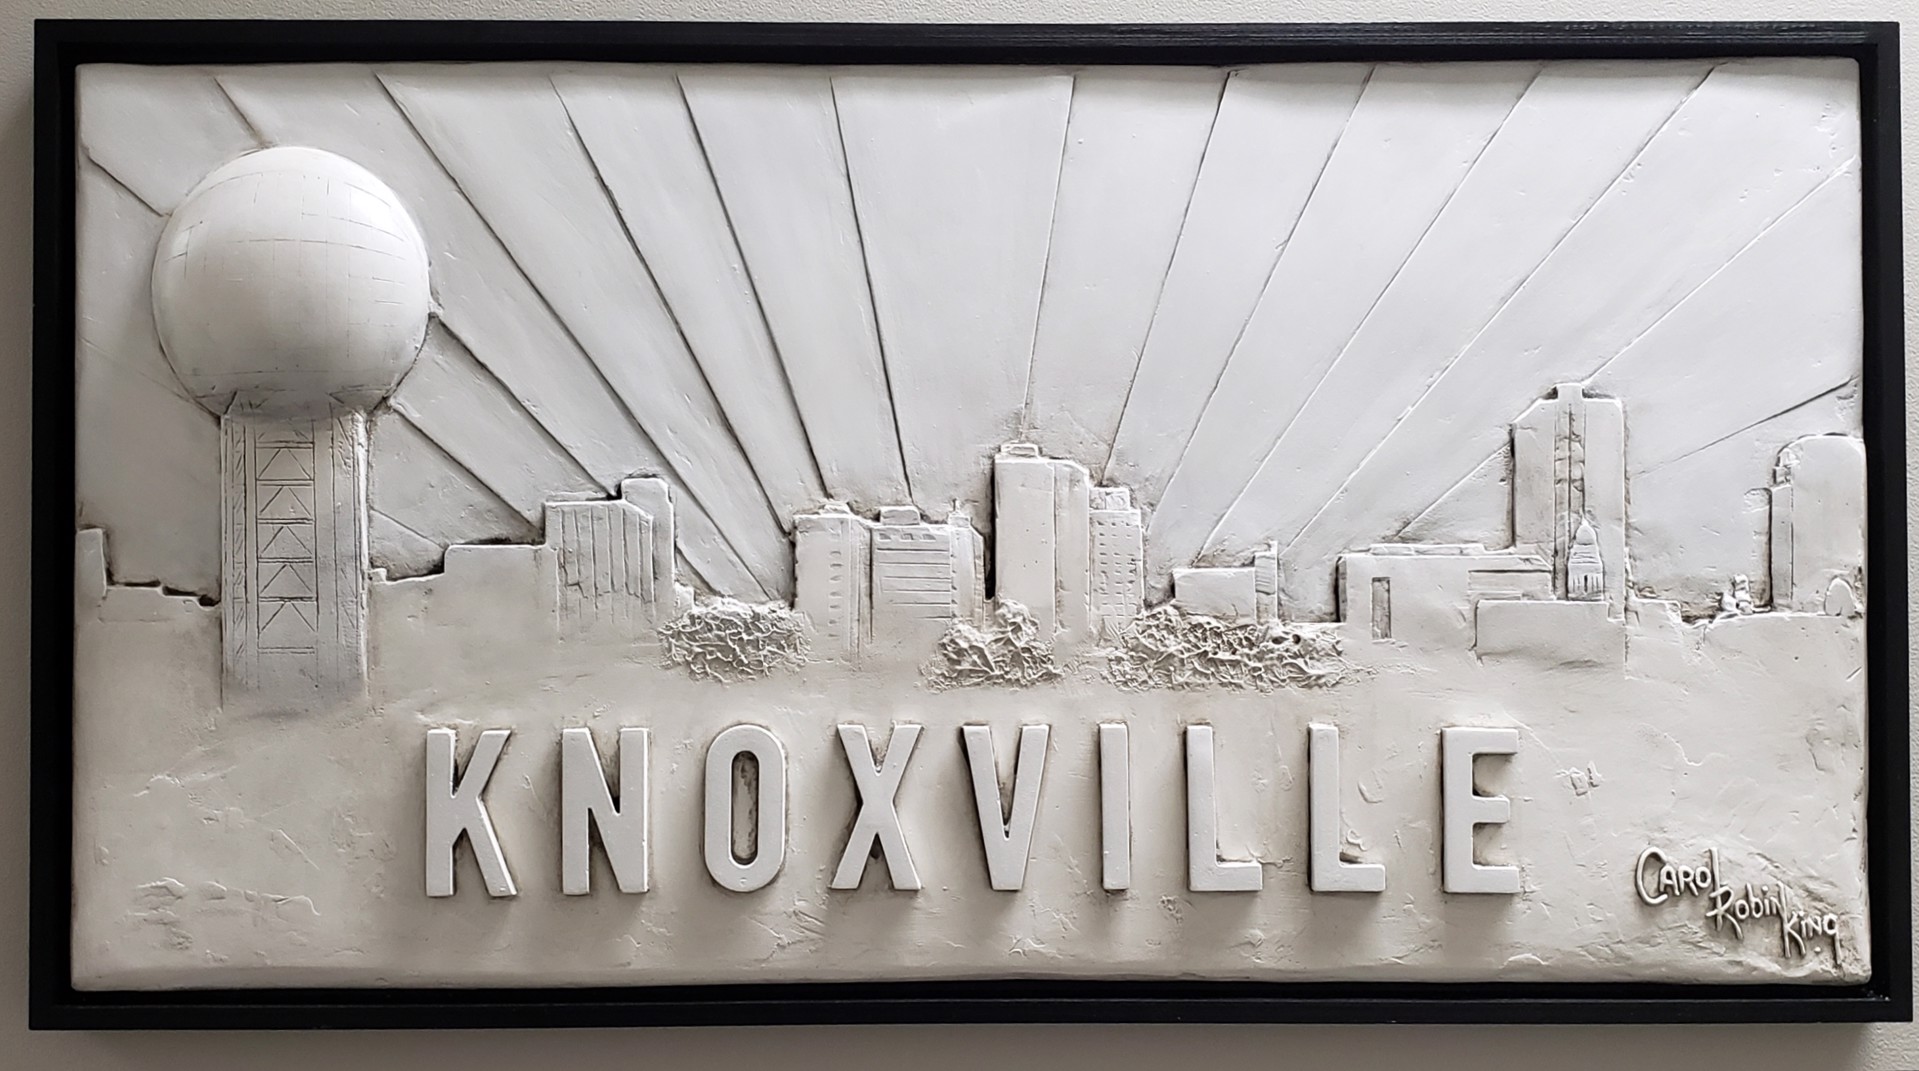 Knxoville Skyline - Shining Forth by Carol Robin King